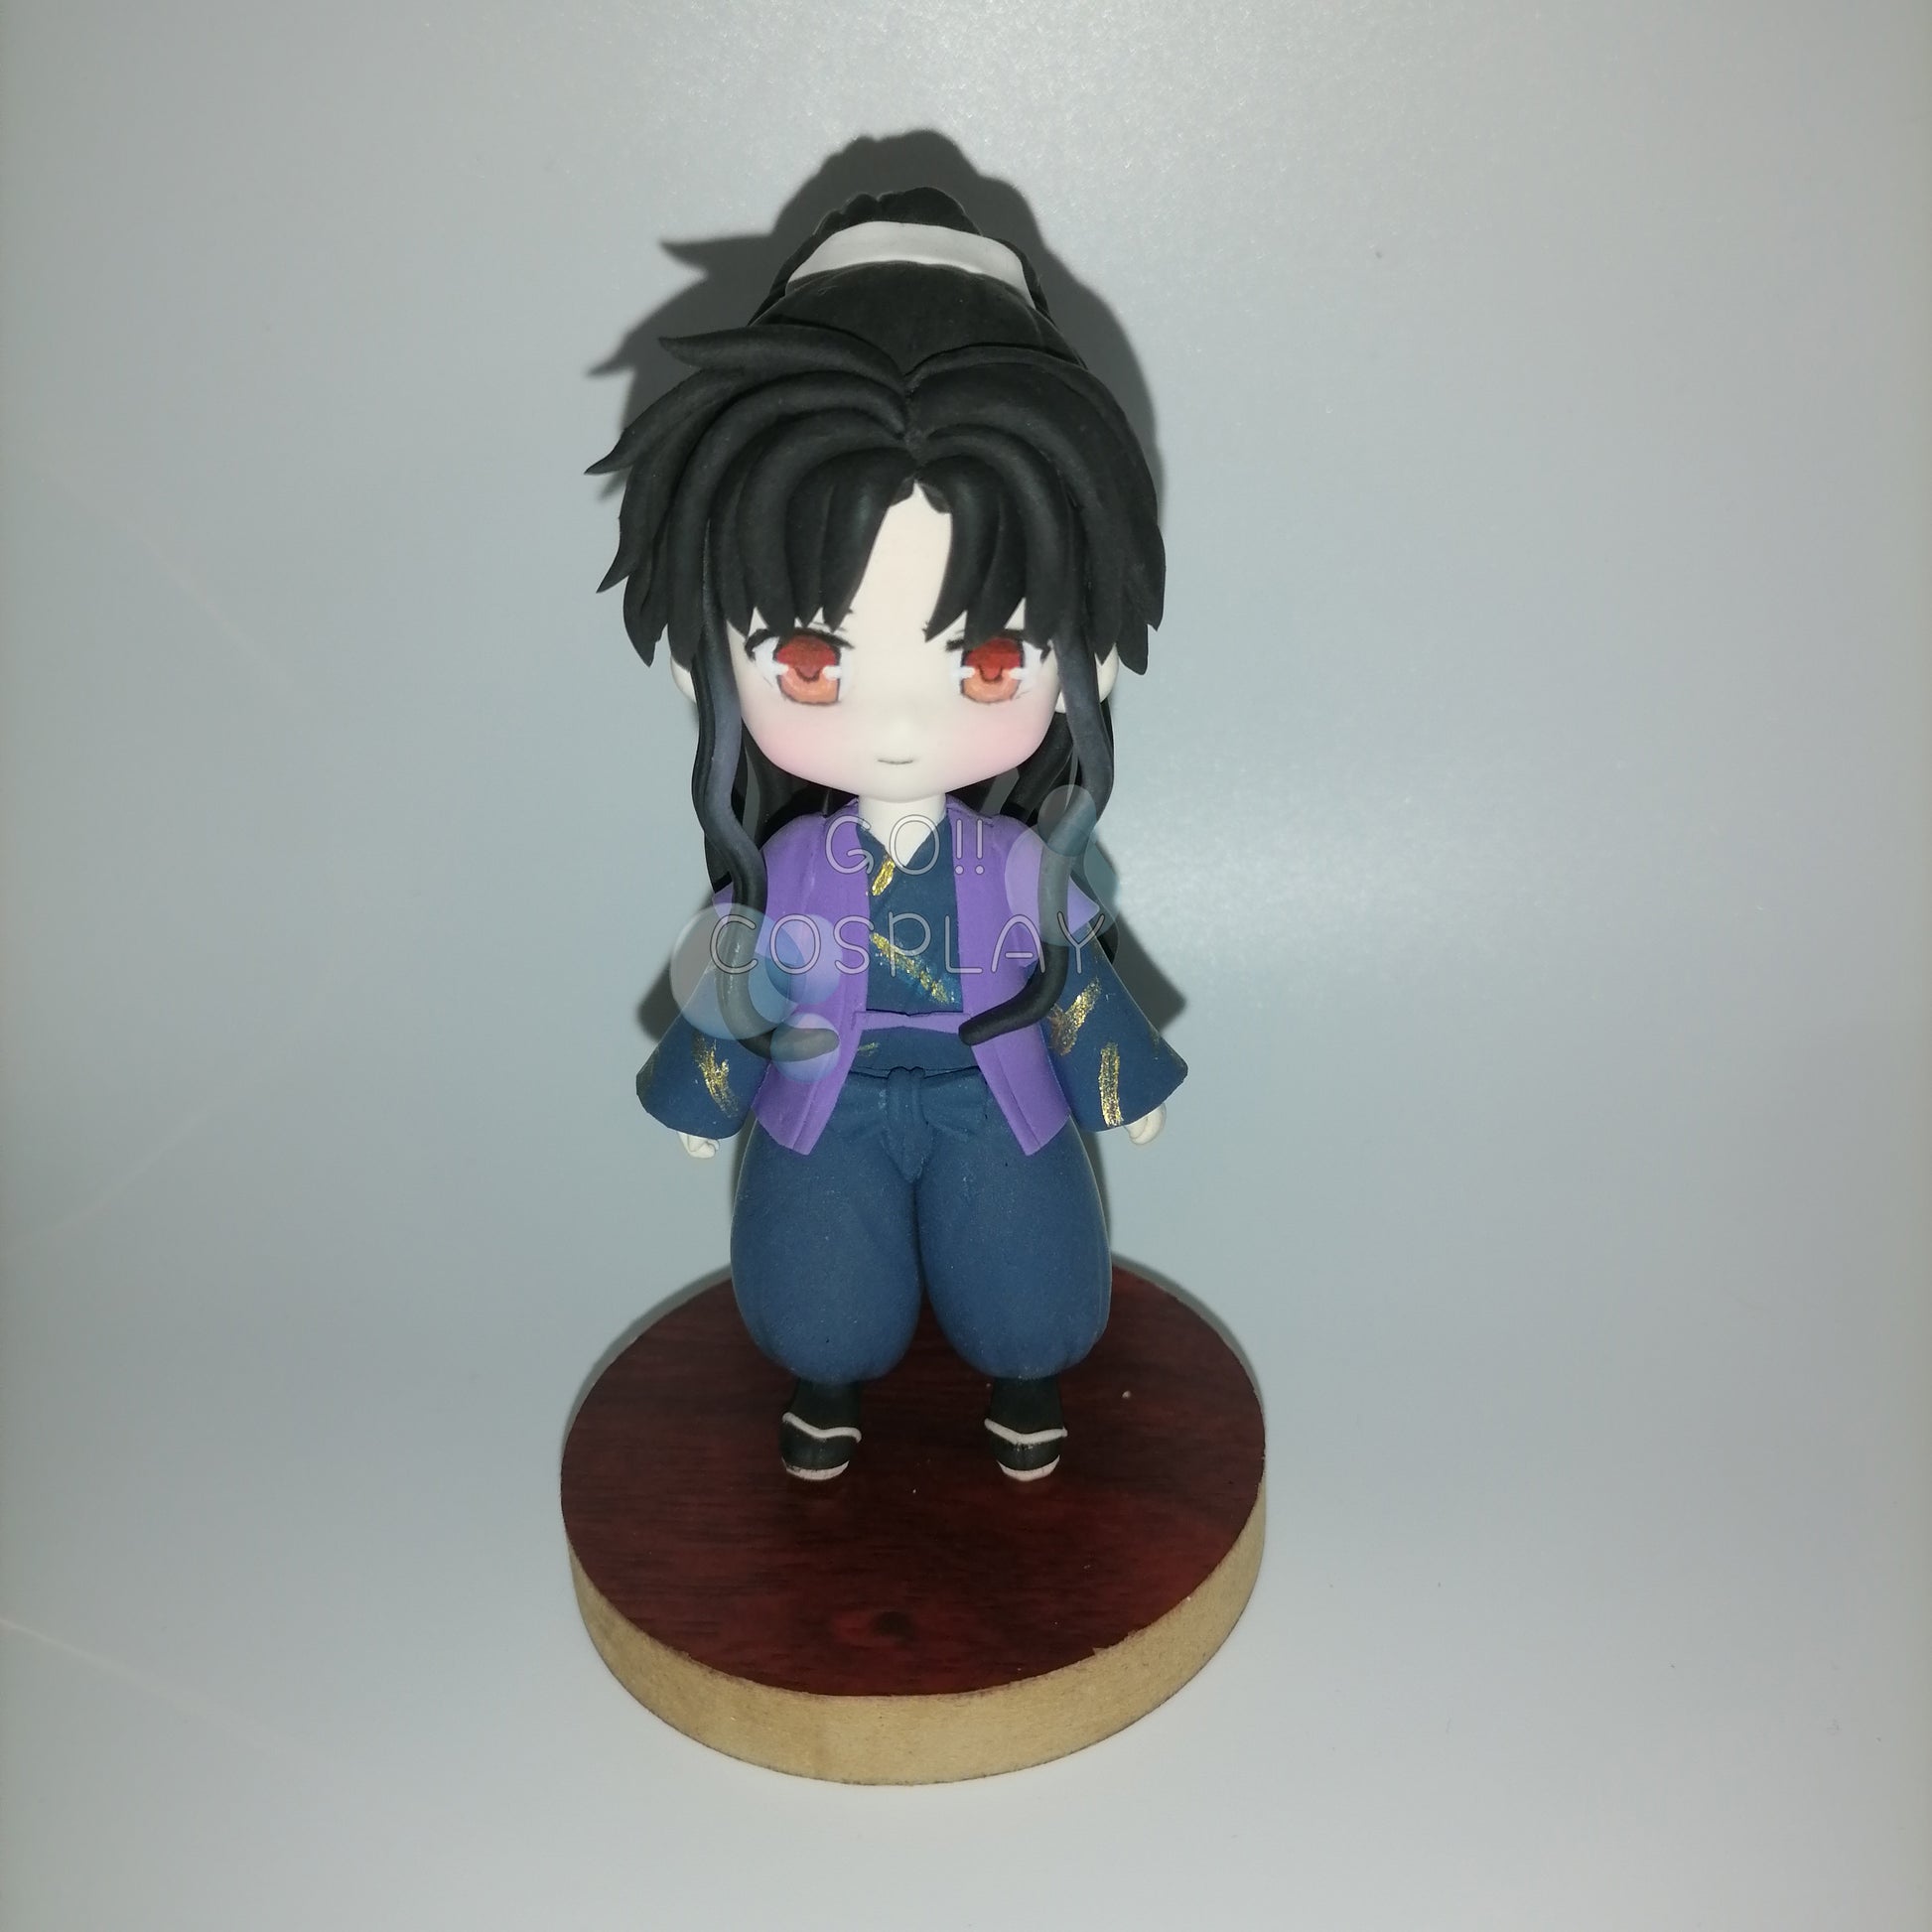 Naraku Chibi Figurine from Anime Inuyasha